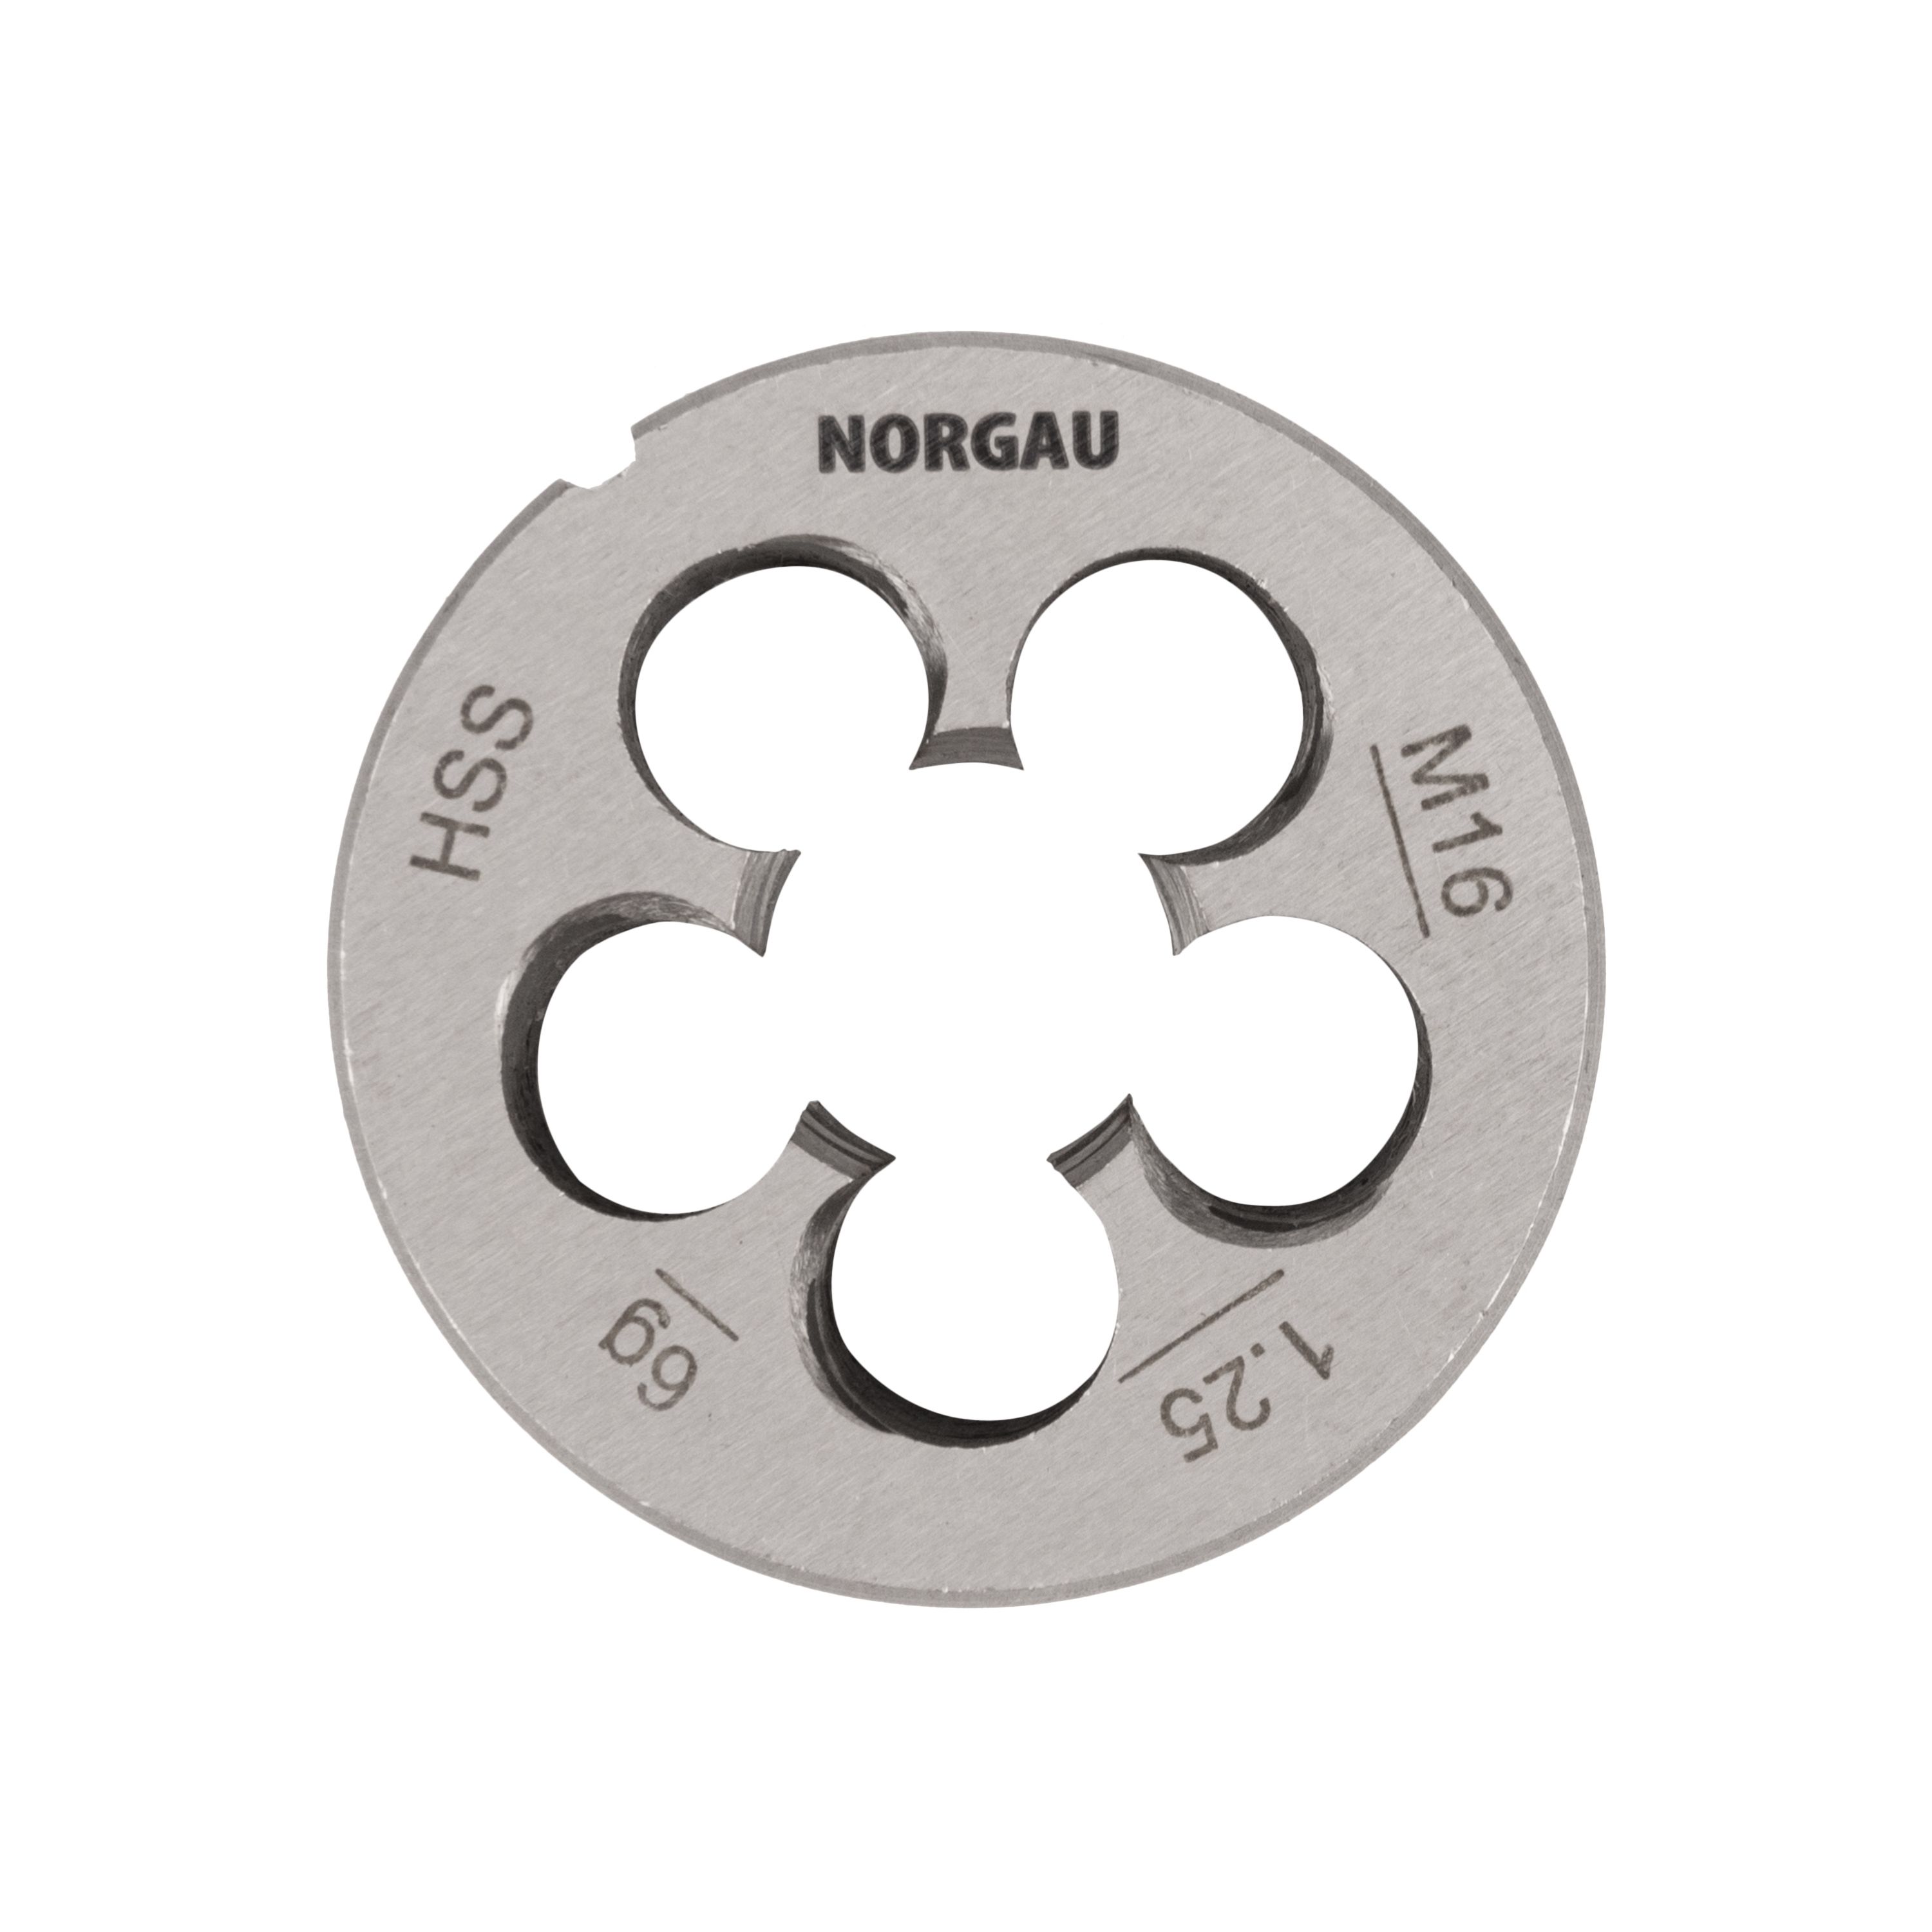 Плашка NORGAU Industrial MF16x1.25х45 мм, метрическая, угол 60°, по DIN223, HSS плашка norgau industrial mf5x0 5х20 мм метрическая угол 60° по din223 hss